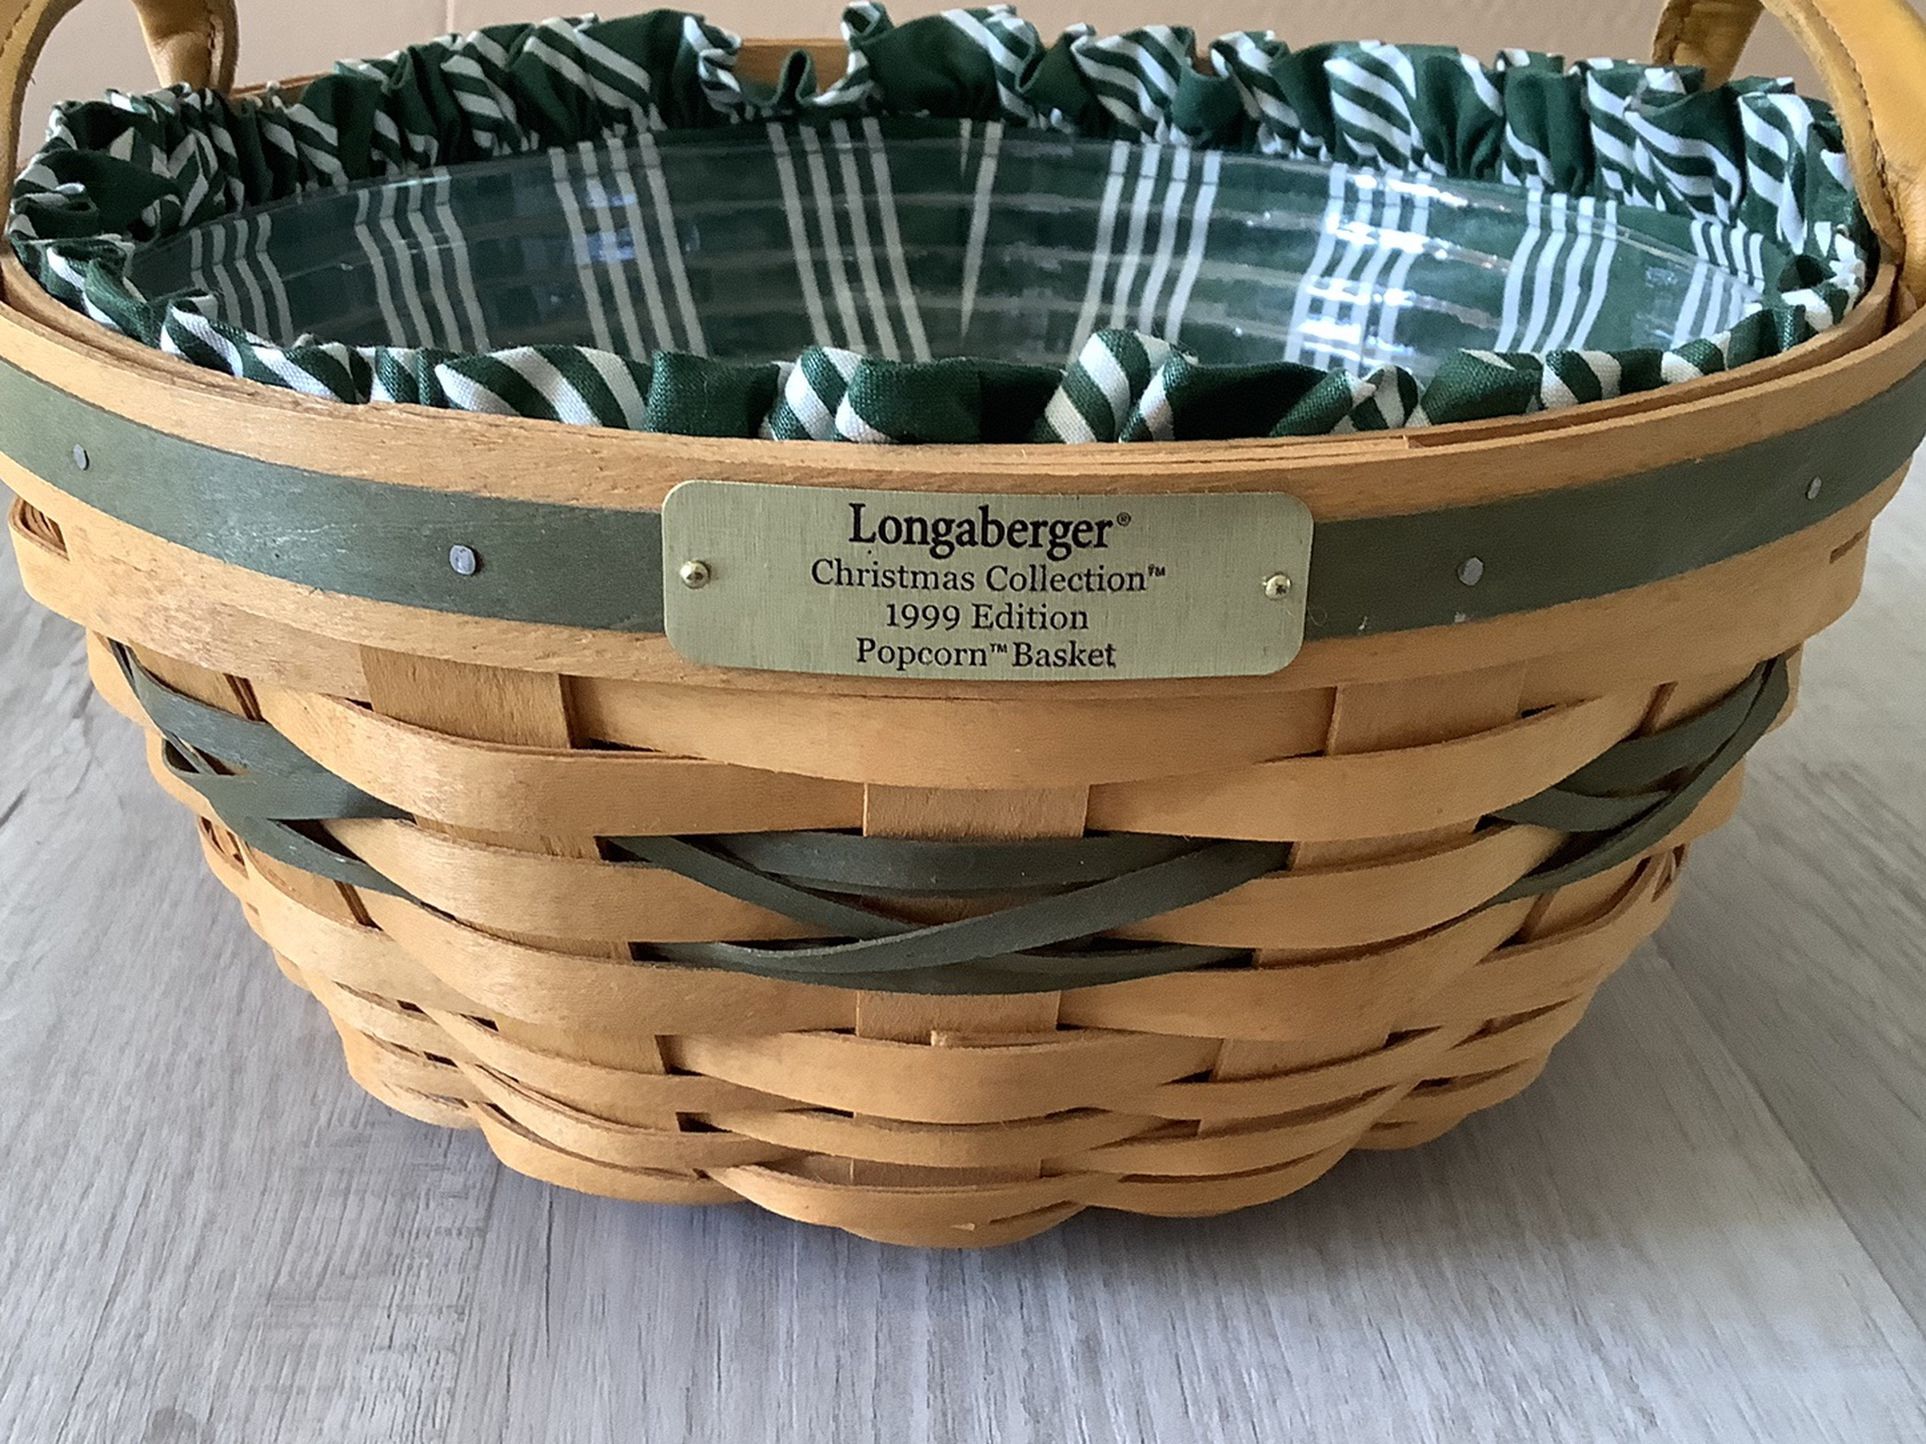 Longaberger Christmas Collection 1999 Edition Popcorn Basket